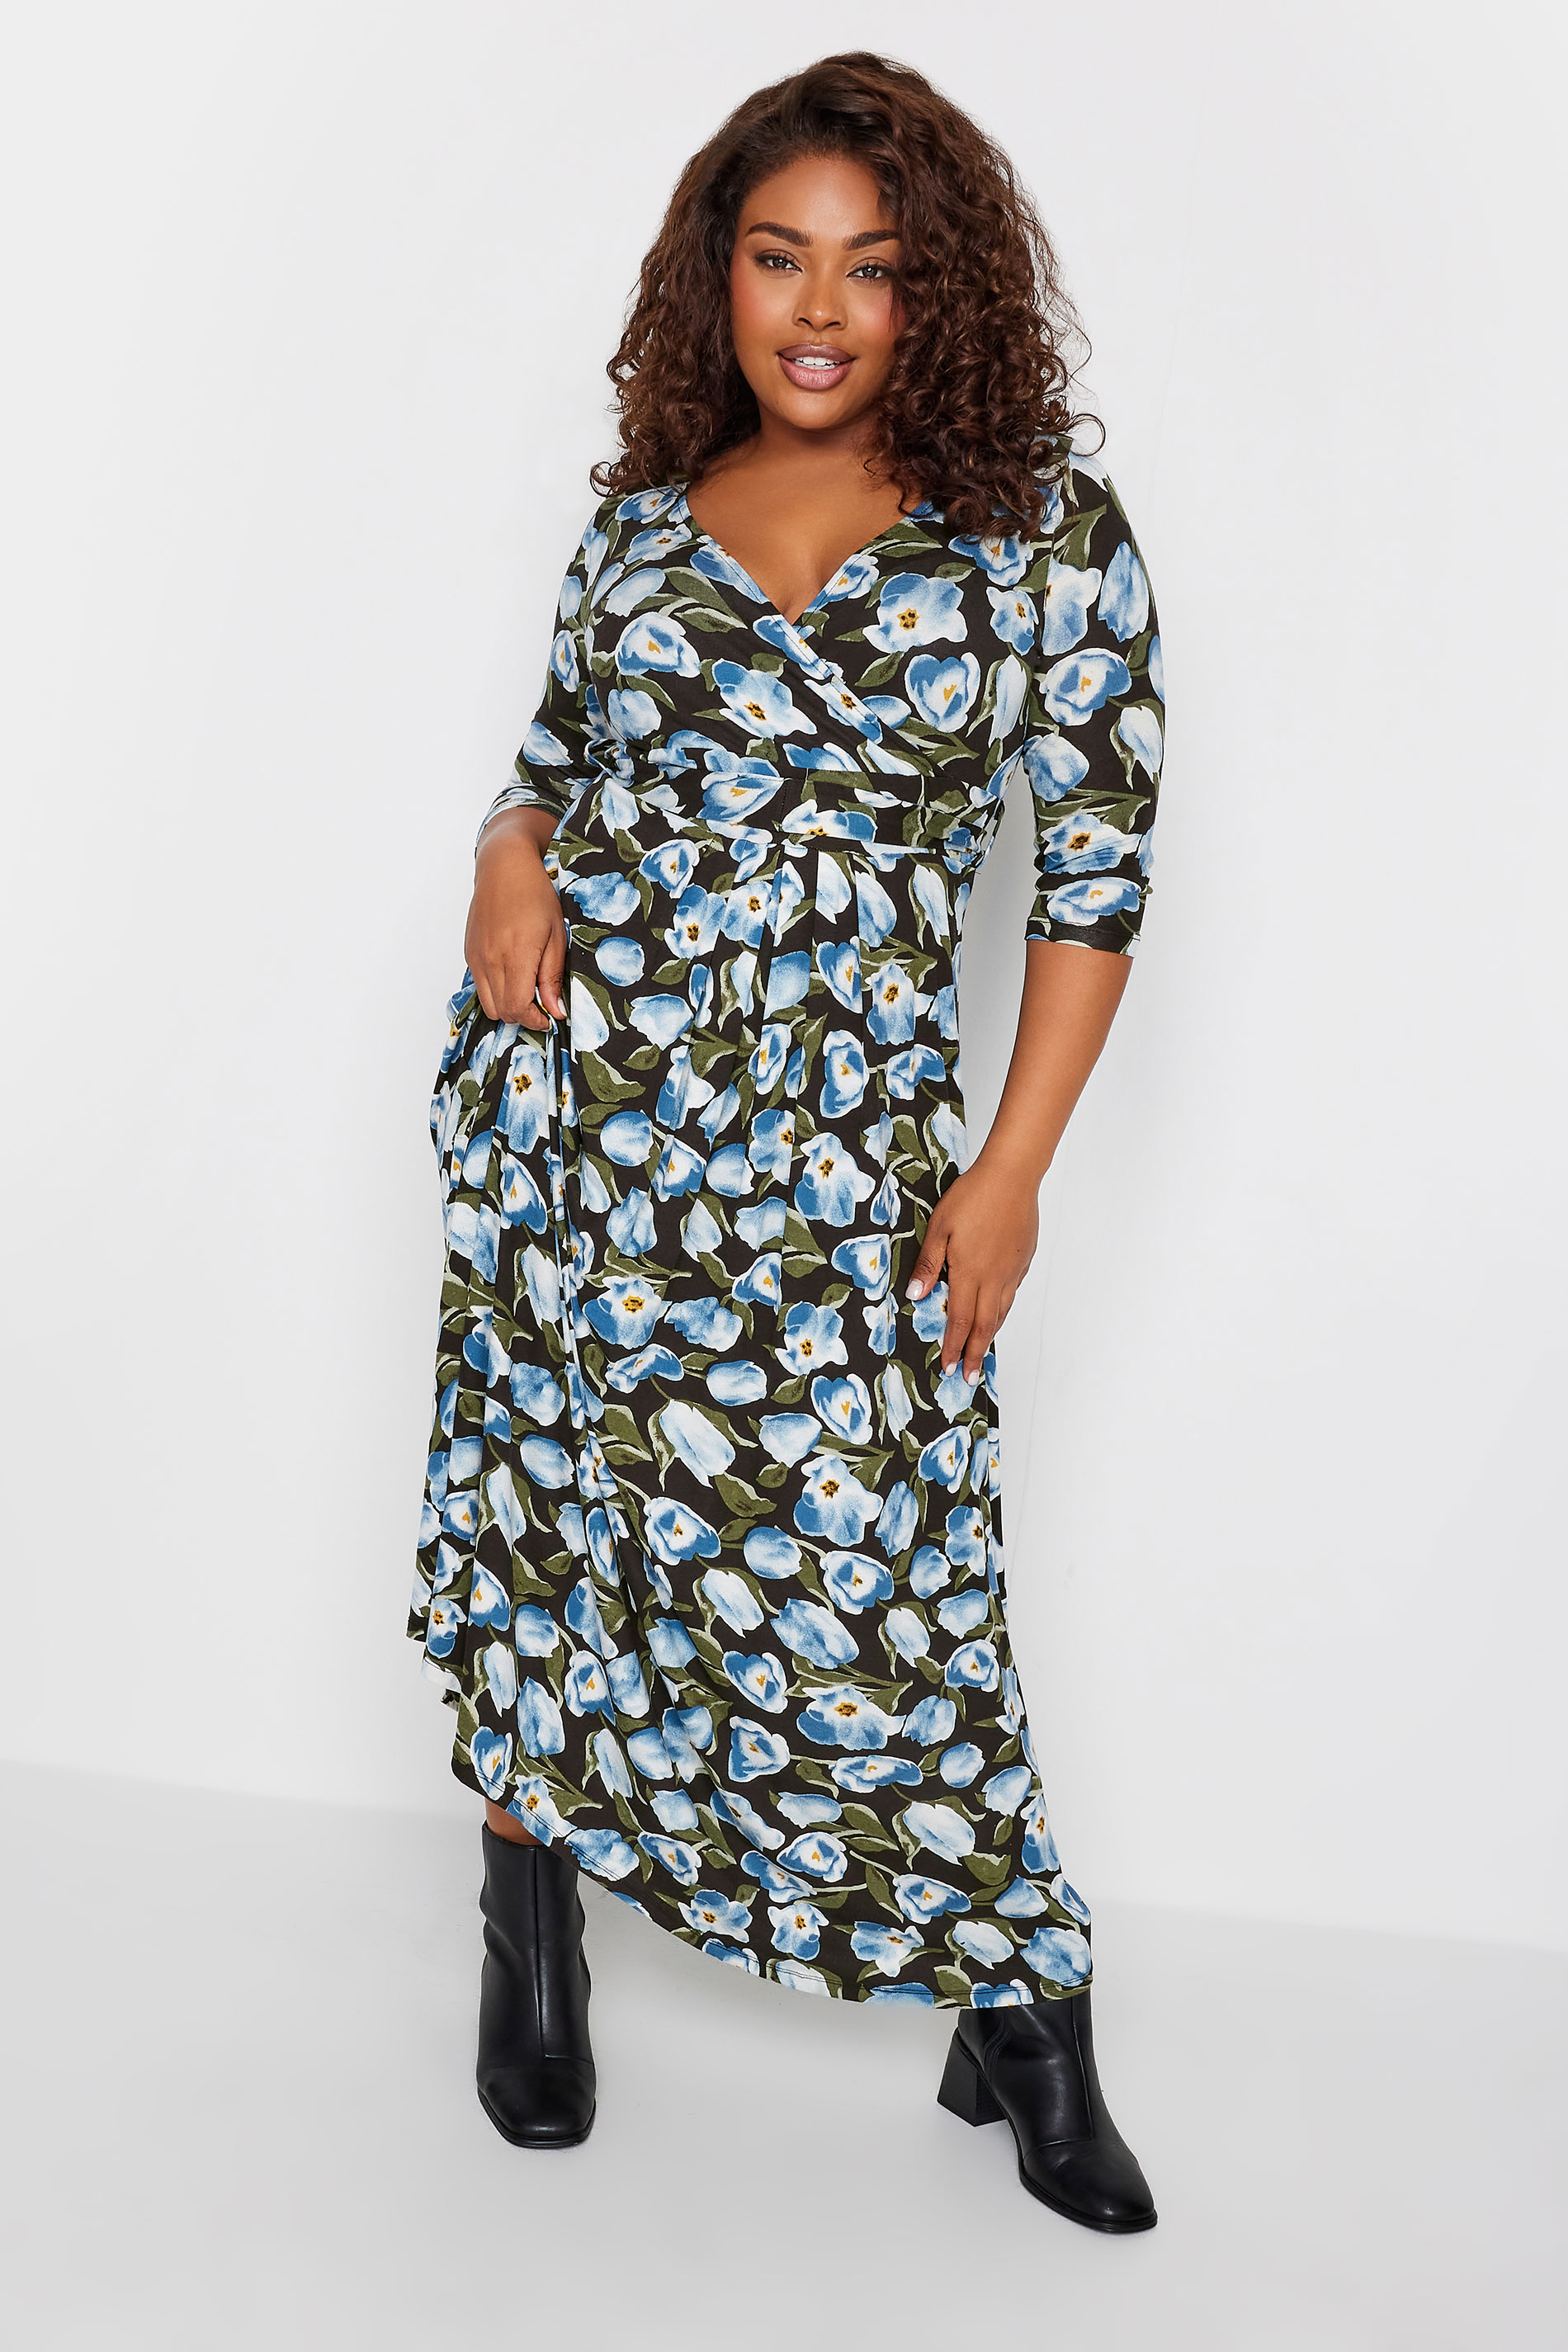 YOURS Plus Size Black Floral Print Maxi Wrap Dress | Yours Clothing 2